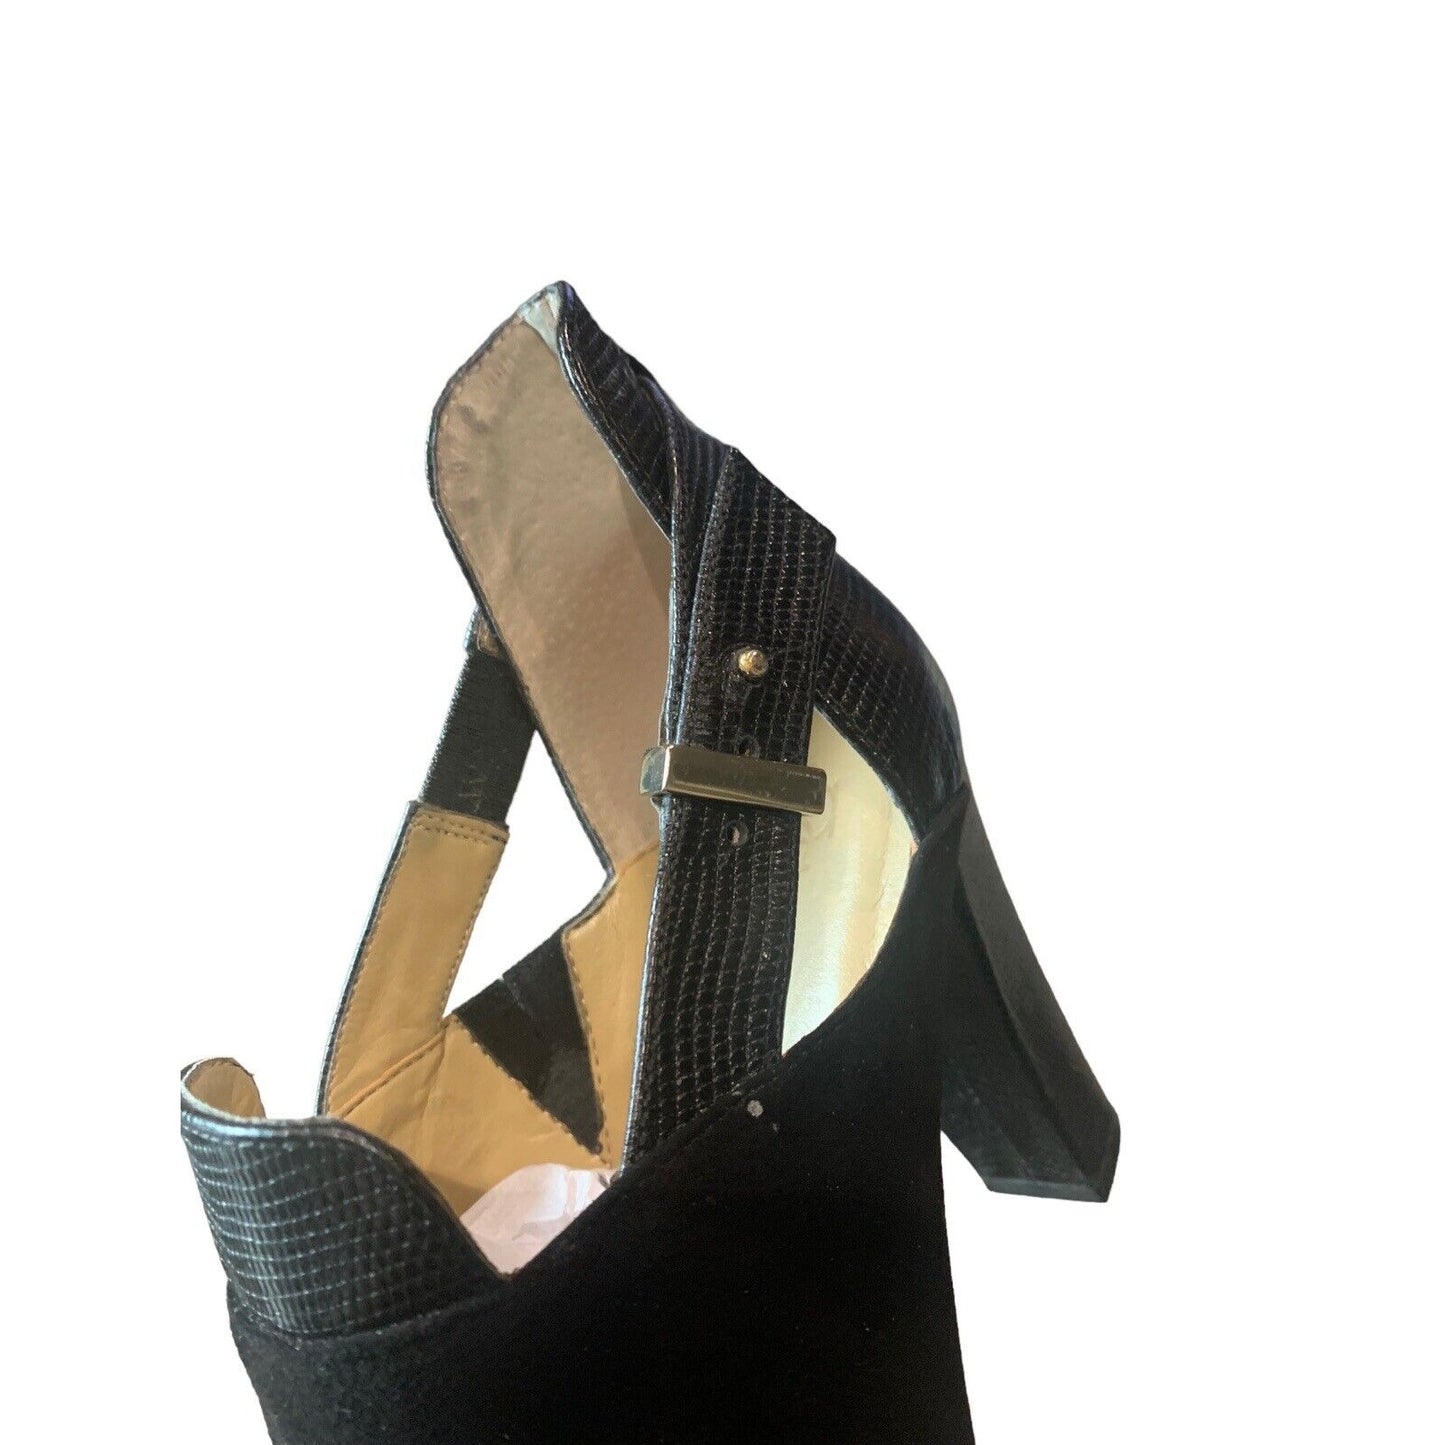 closeup of shoe straps